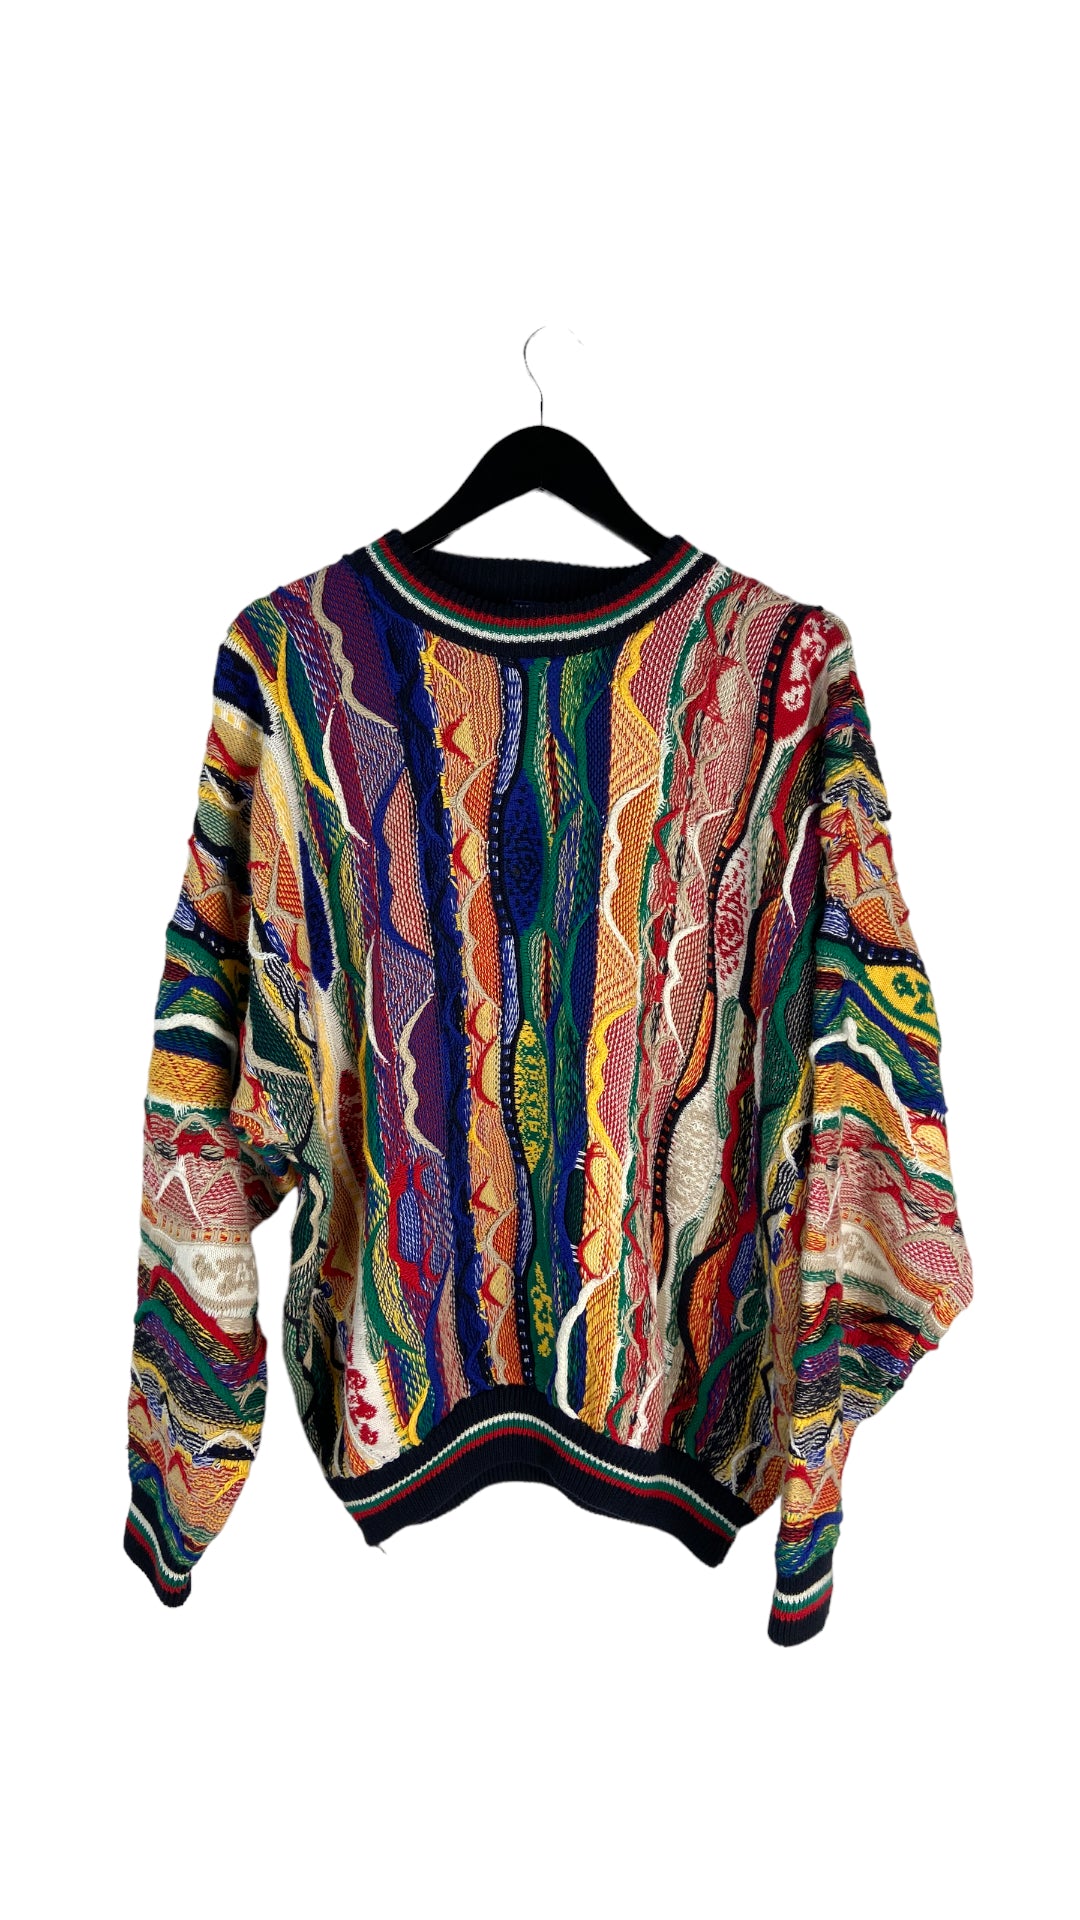 VTG Divots Coogi Style 3D Bright Colored Knit Sweater Sz L